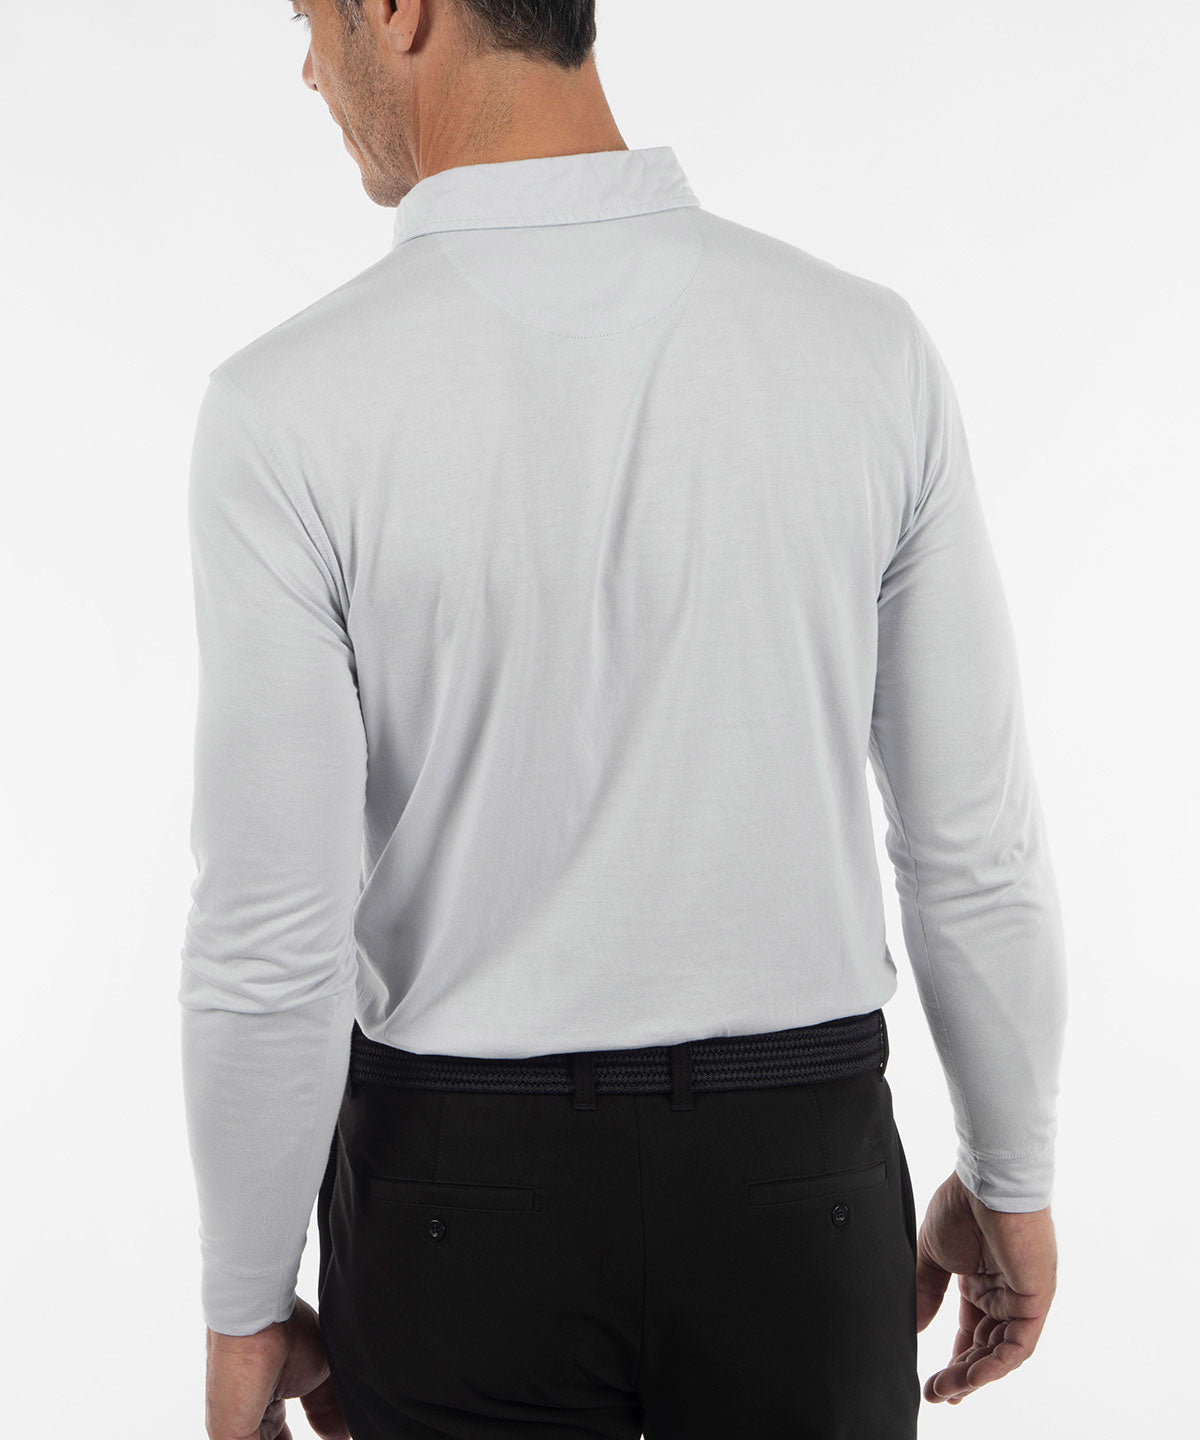 Urtishia Long Sleeve Plain Polo Shirt